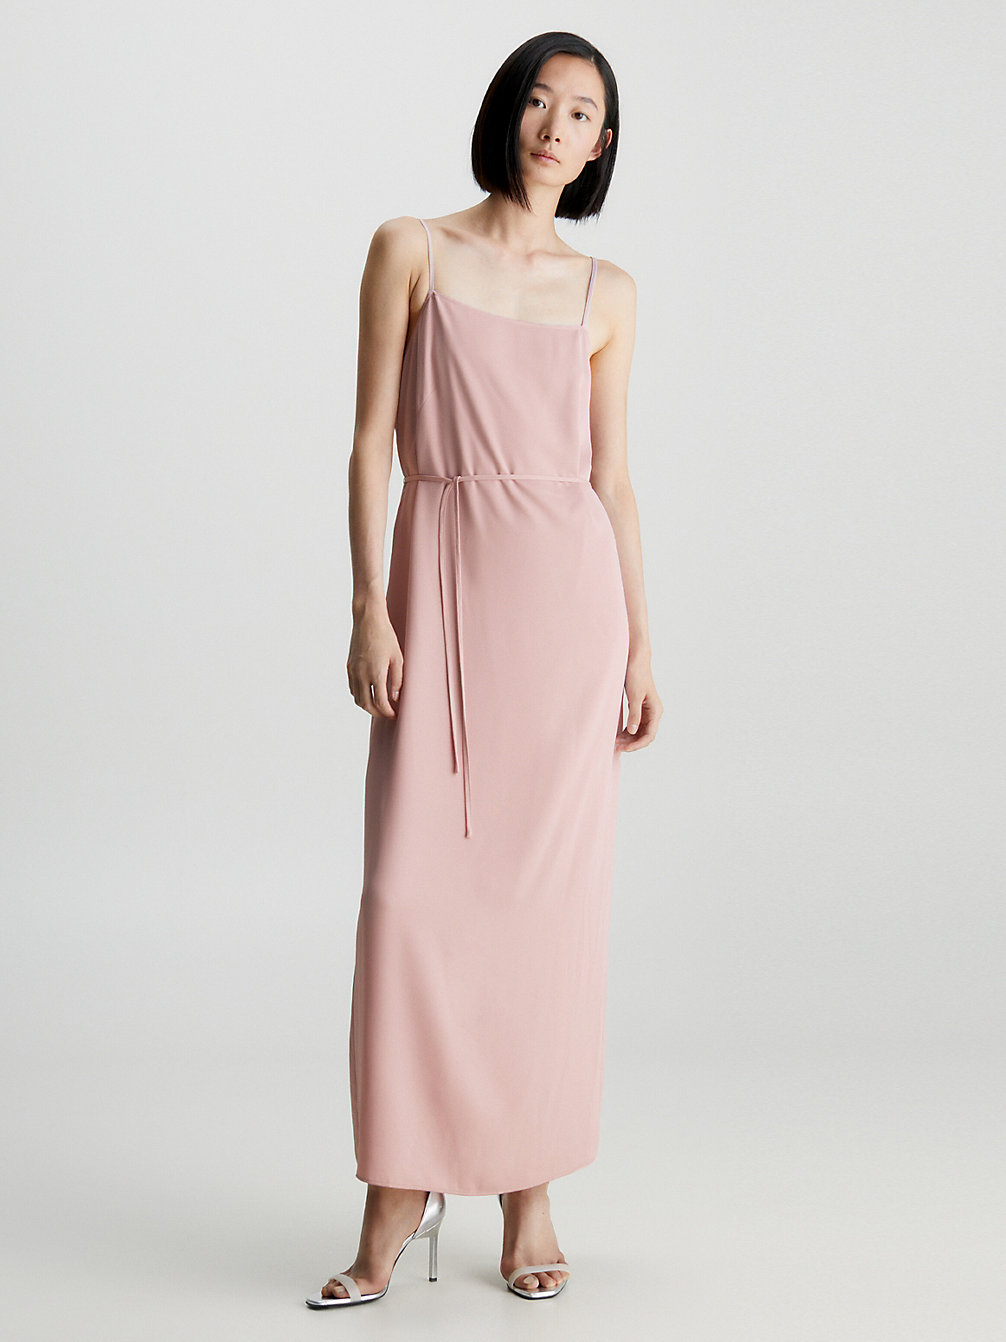 PALE MAUVE Crepe Midi Slip Dress undefined women Calvin Klein